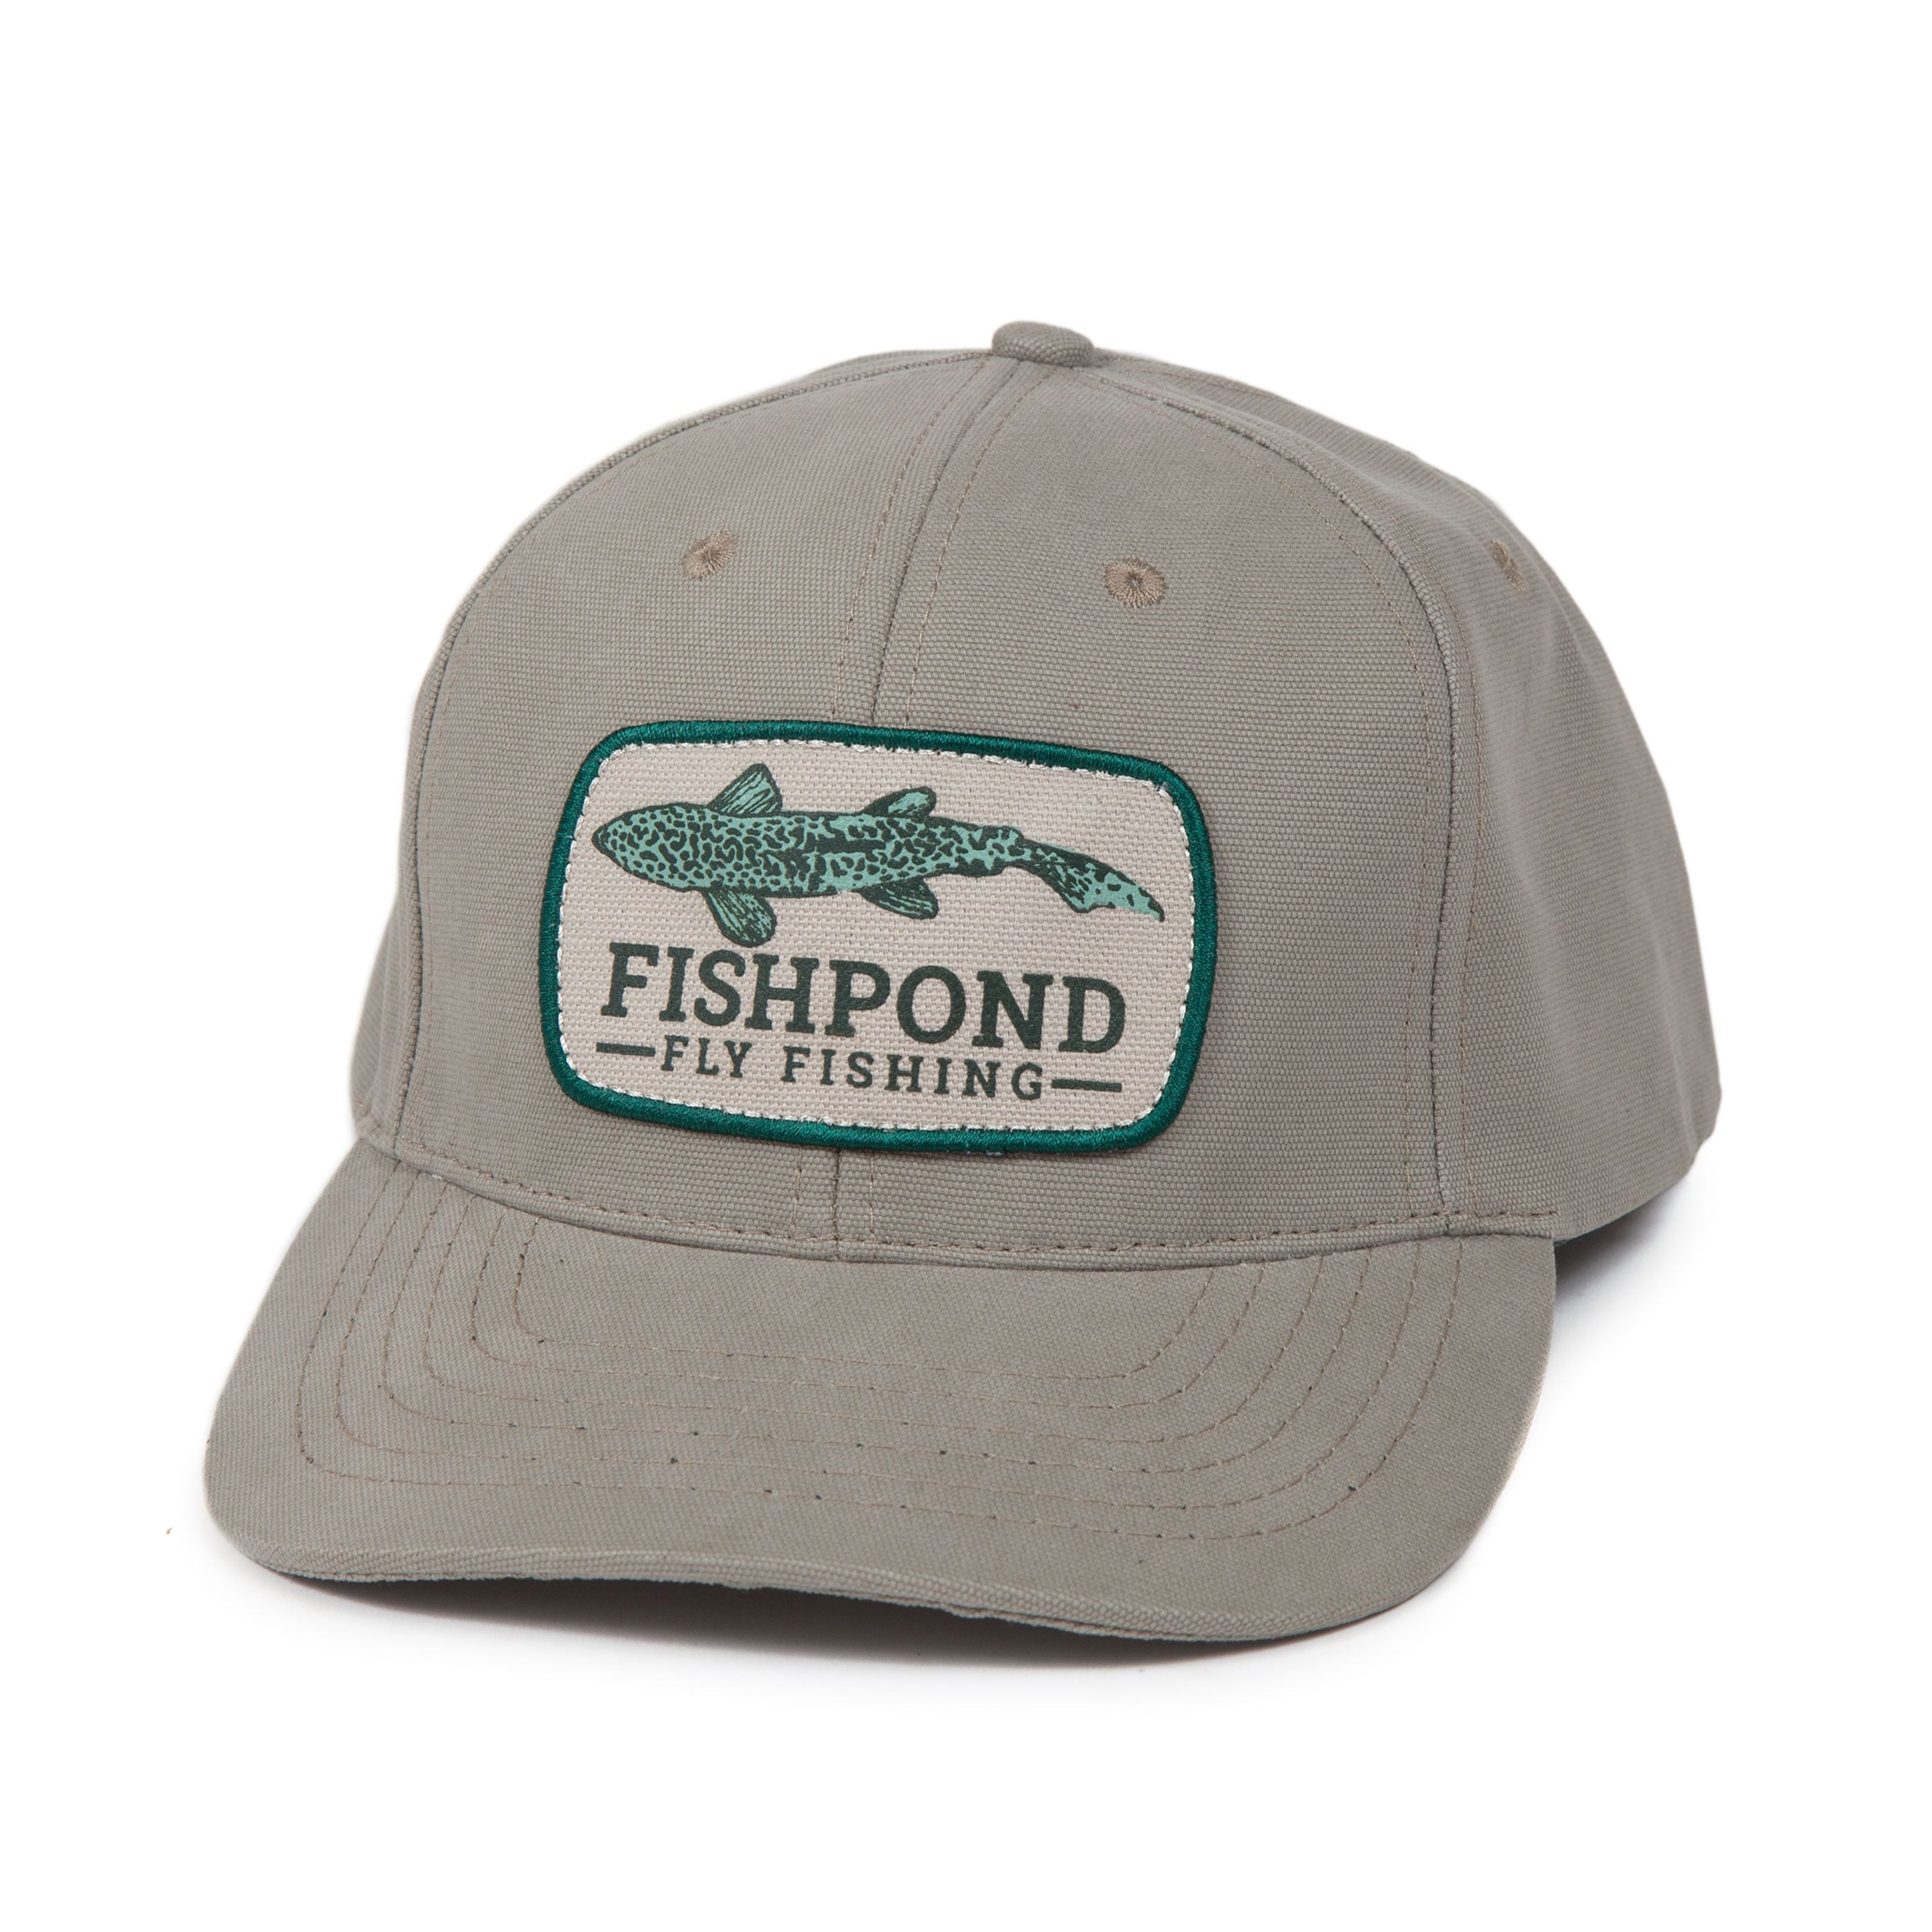 Fishpond - Heritage Trucker Hat - Mountain Angler